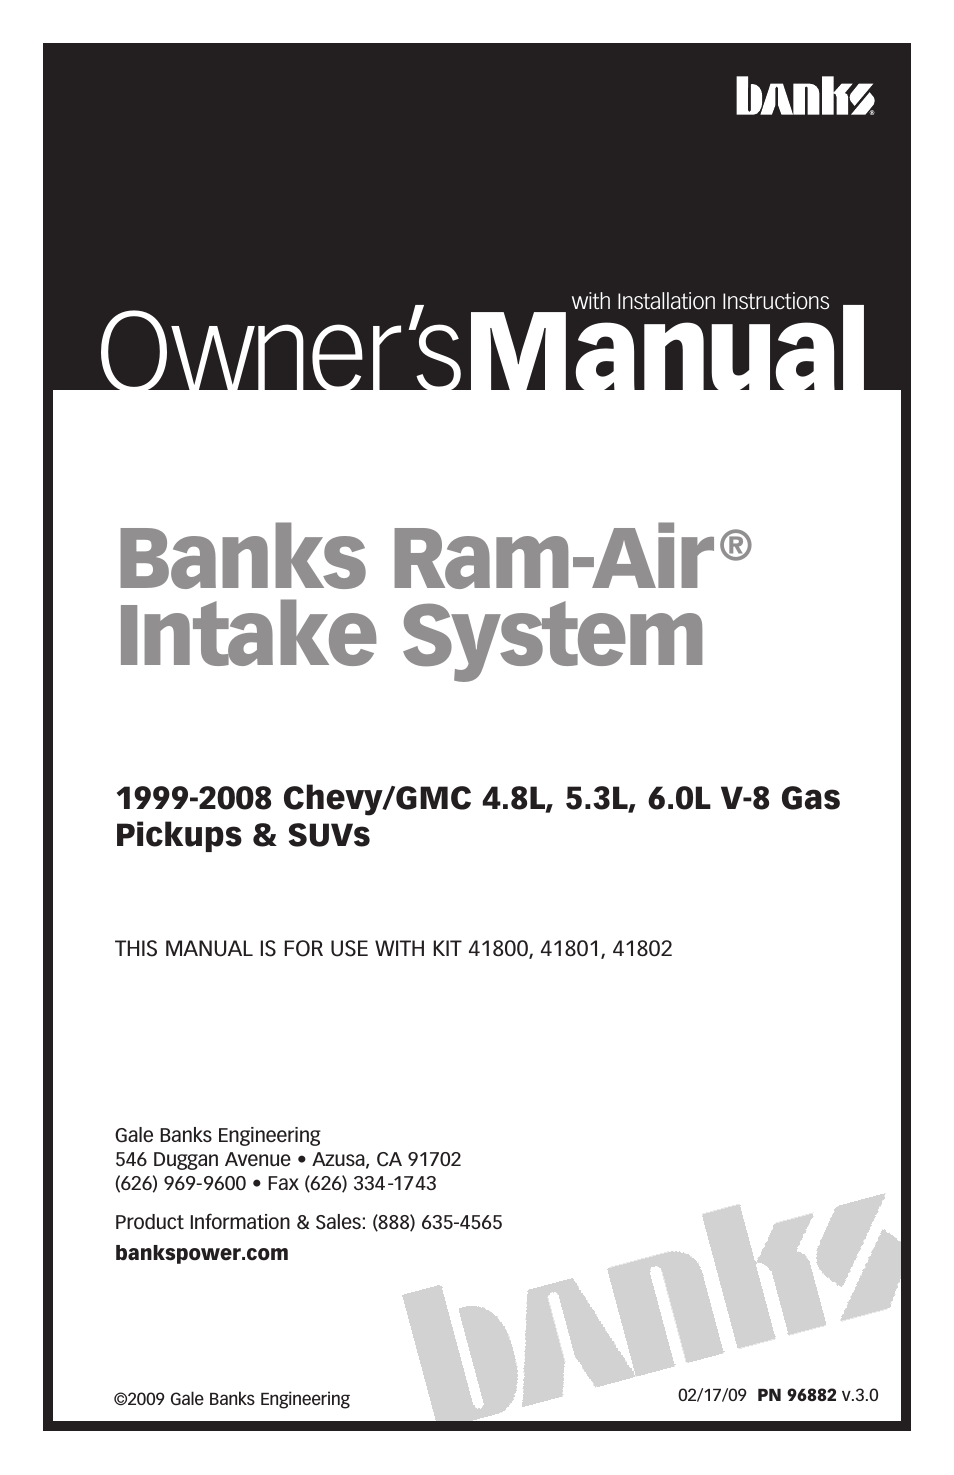 Chevy_GMC Trucks: Gas ’99 - 14 4.3,4.8,5.3,6.0,6.2,8.1 Intake- Ram-Air Intake System '99-08 Chevy-GMC (4.8L, 5.3L & 6.0L) Pickups & SUVs